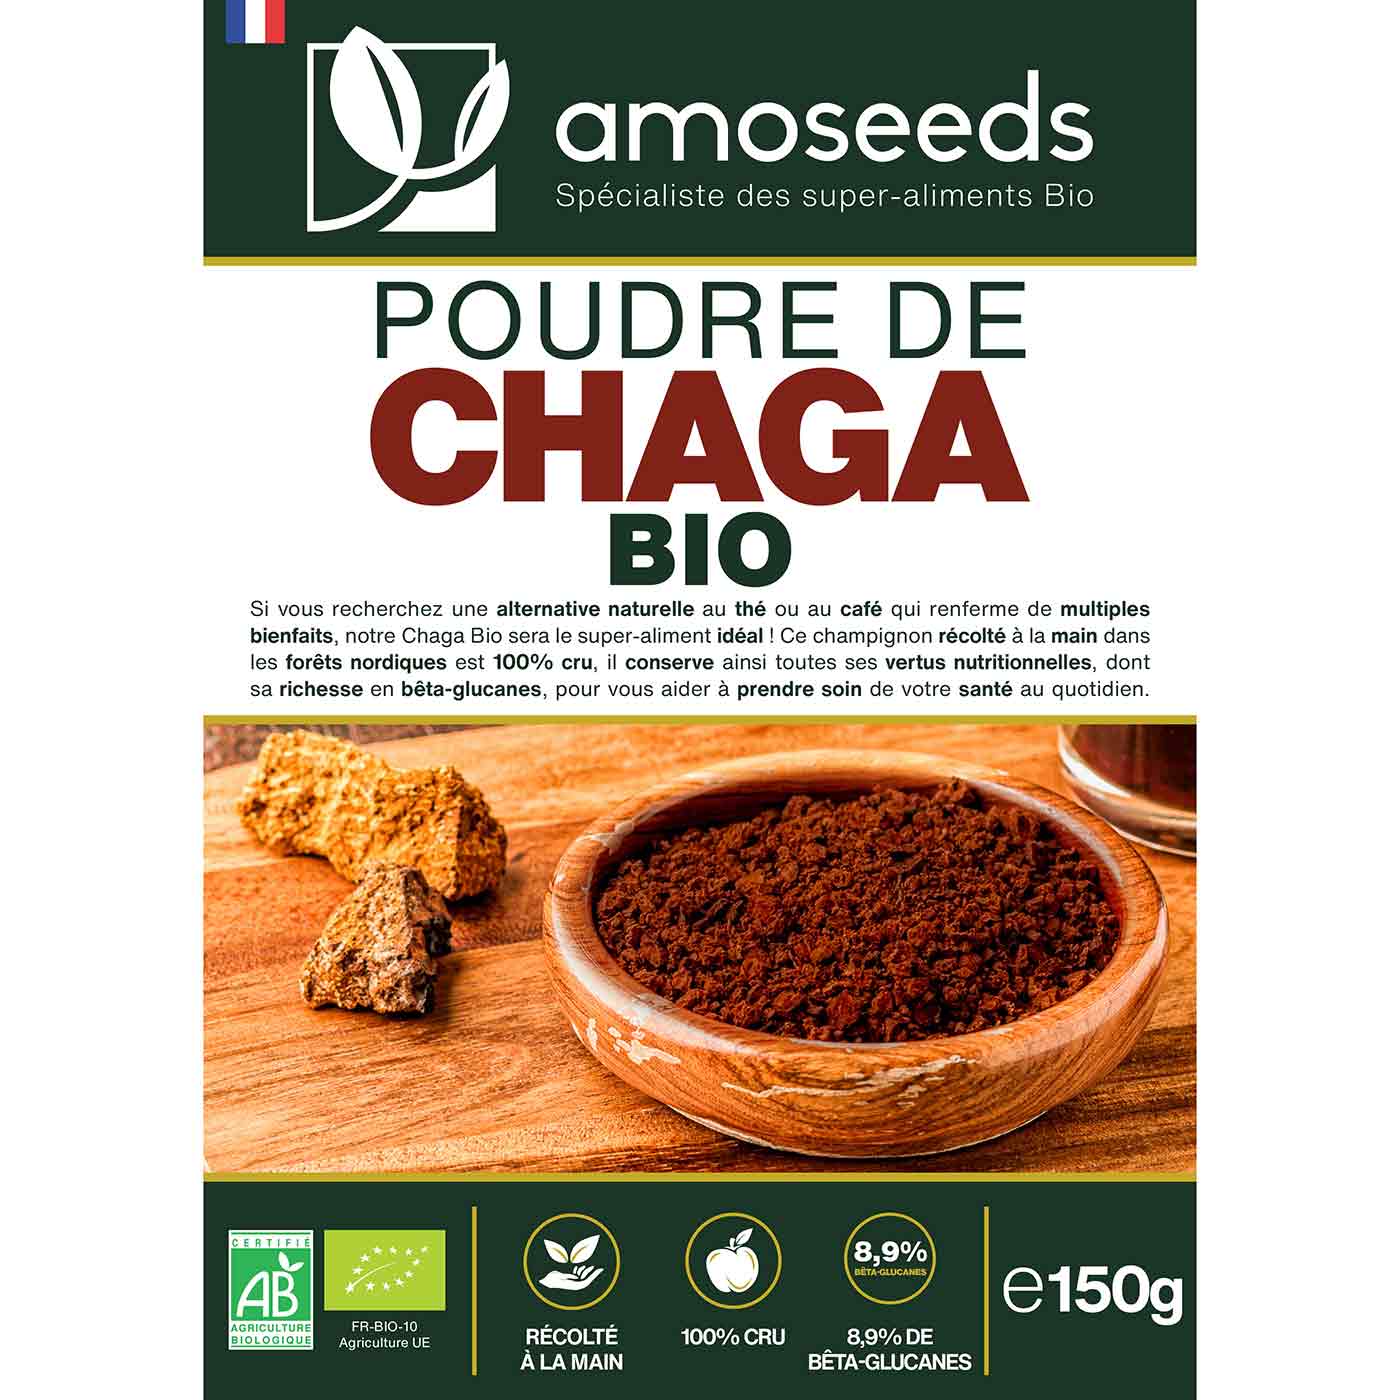 Poudre de Chaga Bio 150G amoseeds specialiste des super aliments Bio